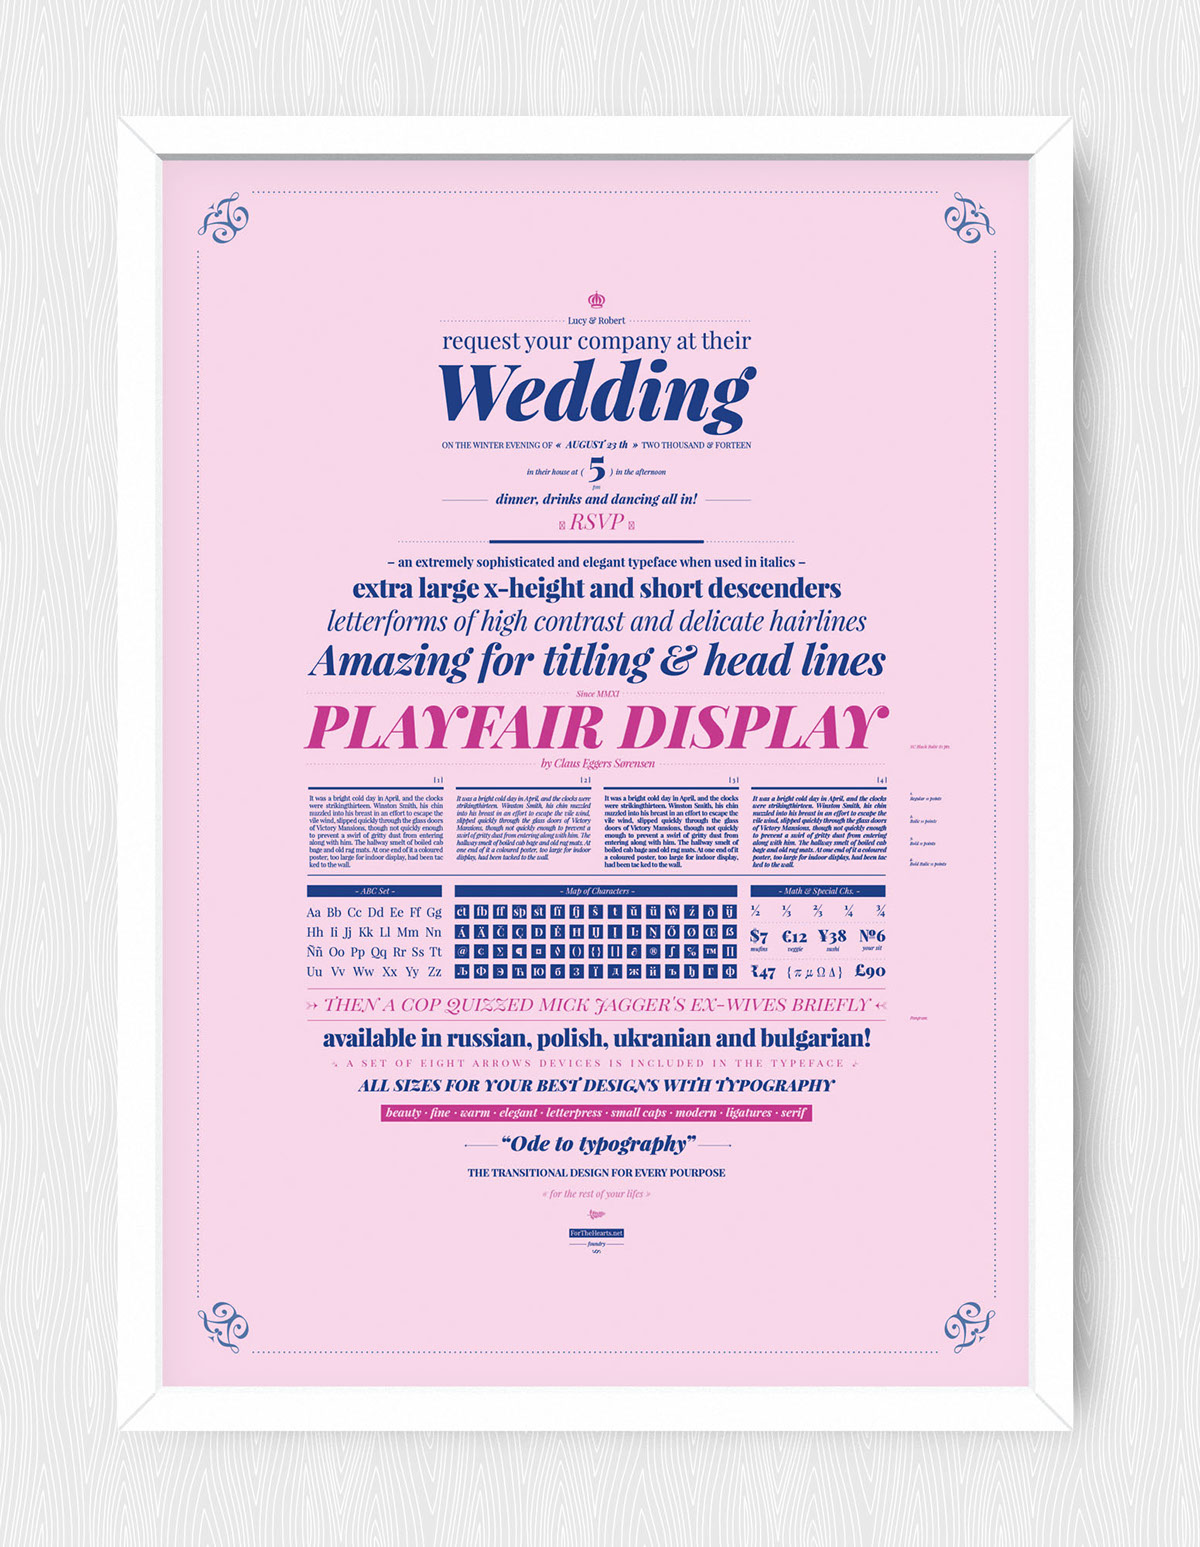 tipografia especimen editorial poster fadu uba cosgaya PlayFair Display editorial design  graphic design 